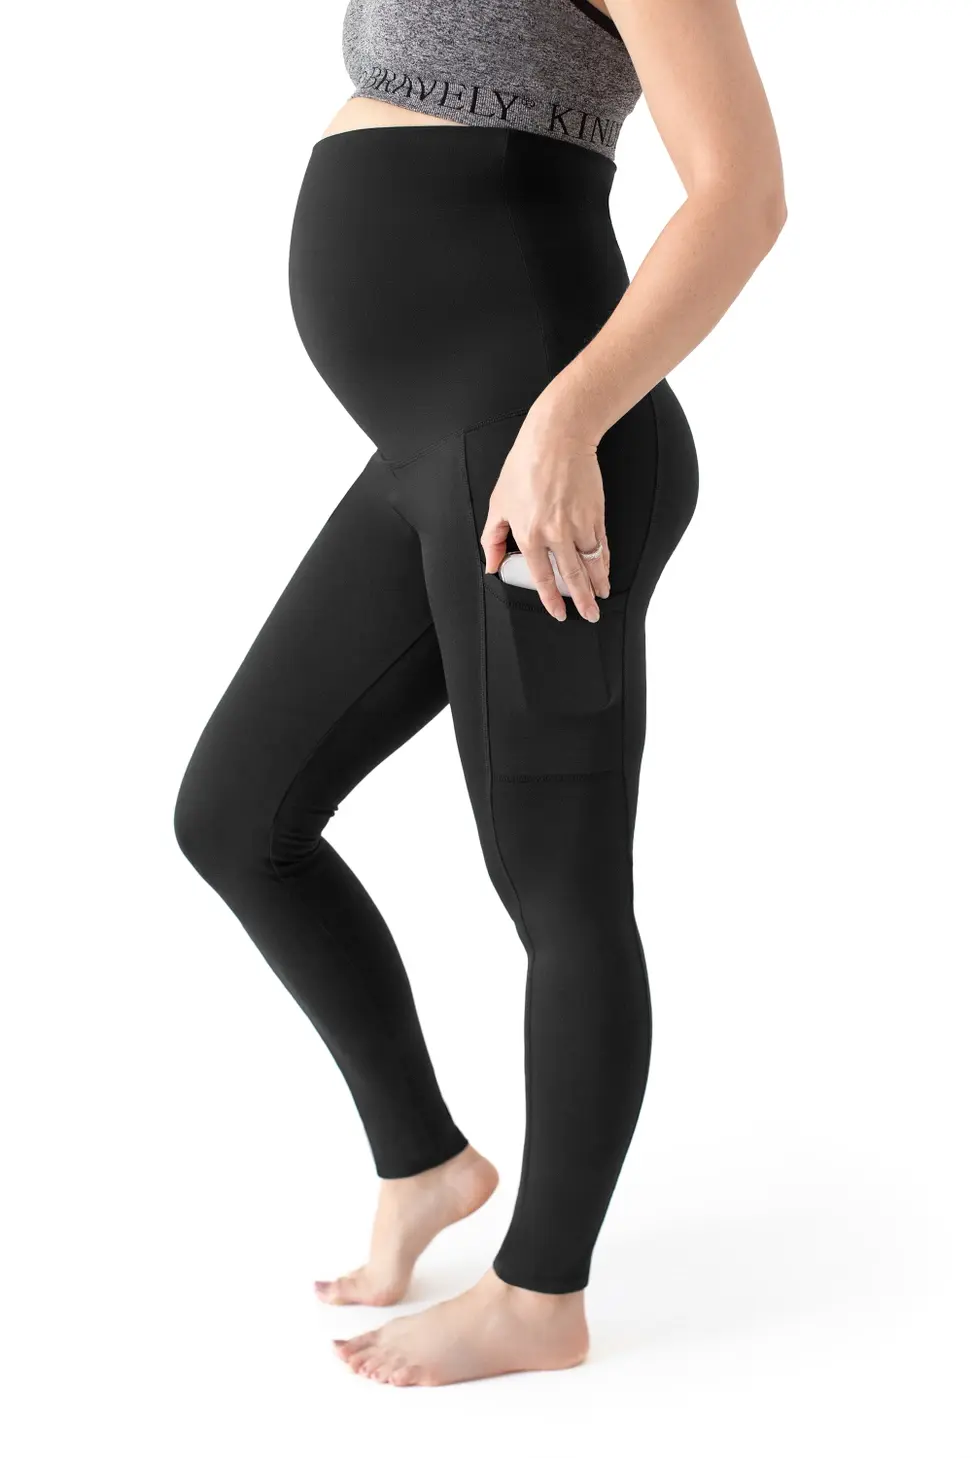 Louisa Maternity & Postpartum Support Leggings with Pocket- Black